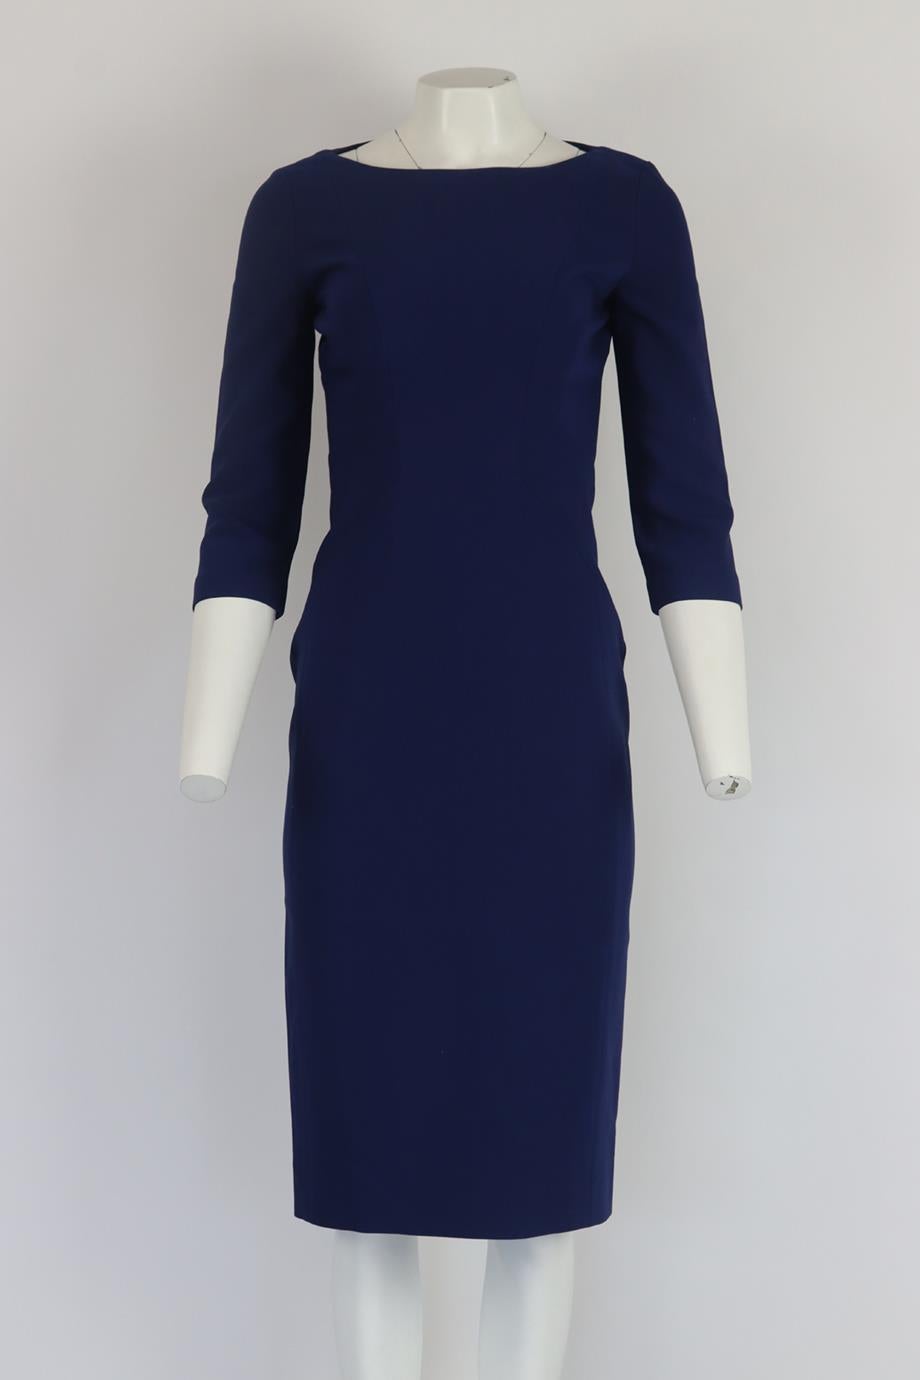 Michael Kors Collection stretch wool crepe midi dress. Blue. 3/4 sleeve, crewneck. Zip fastening at back. 90% Lane Wool, 8% polyamide, 2% spandex; lining: 48% polyamide, 40% silk, 12% spandex. Size: US 4 (UK 8, FR 36, IT 40). Bust: 33 in. Waist: